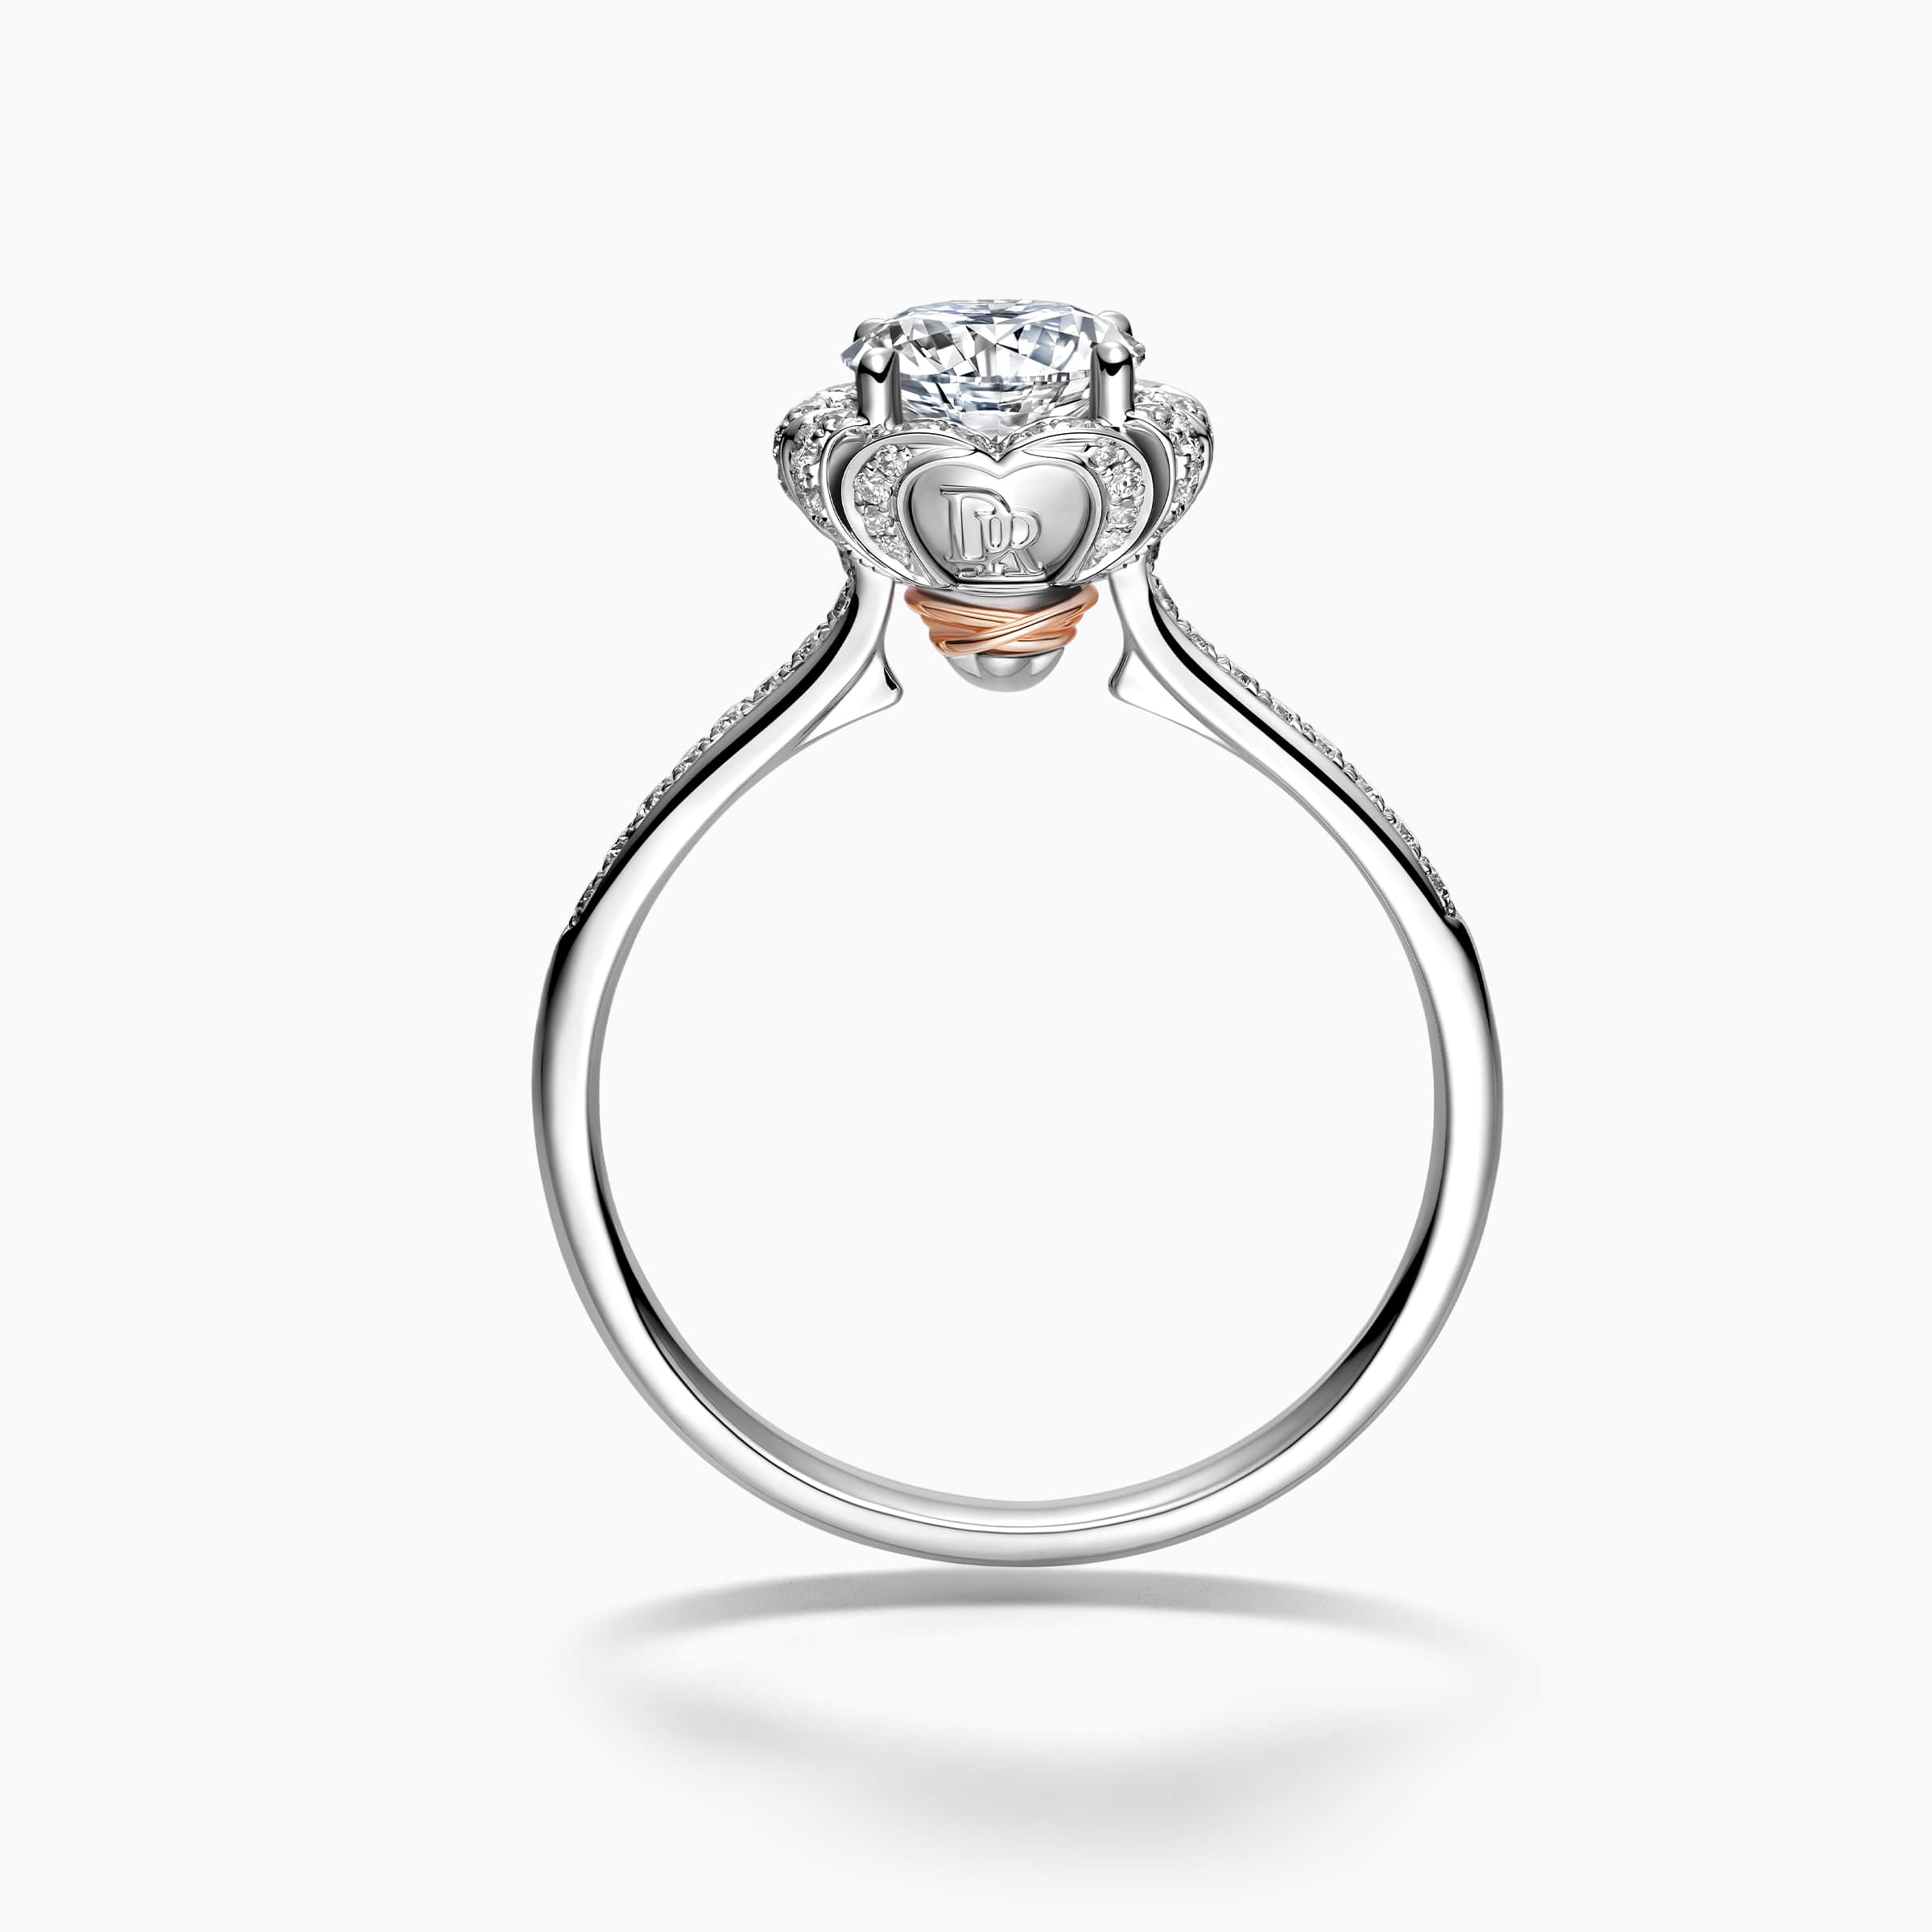 Darry Ring designer engagement ring